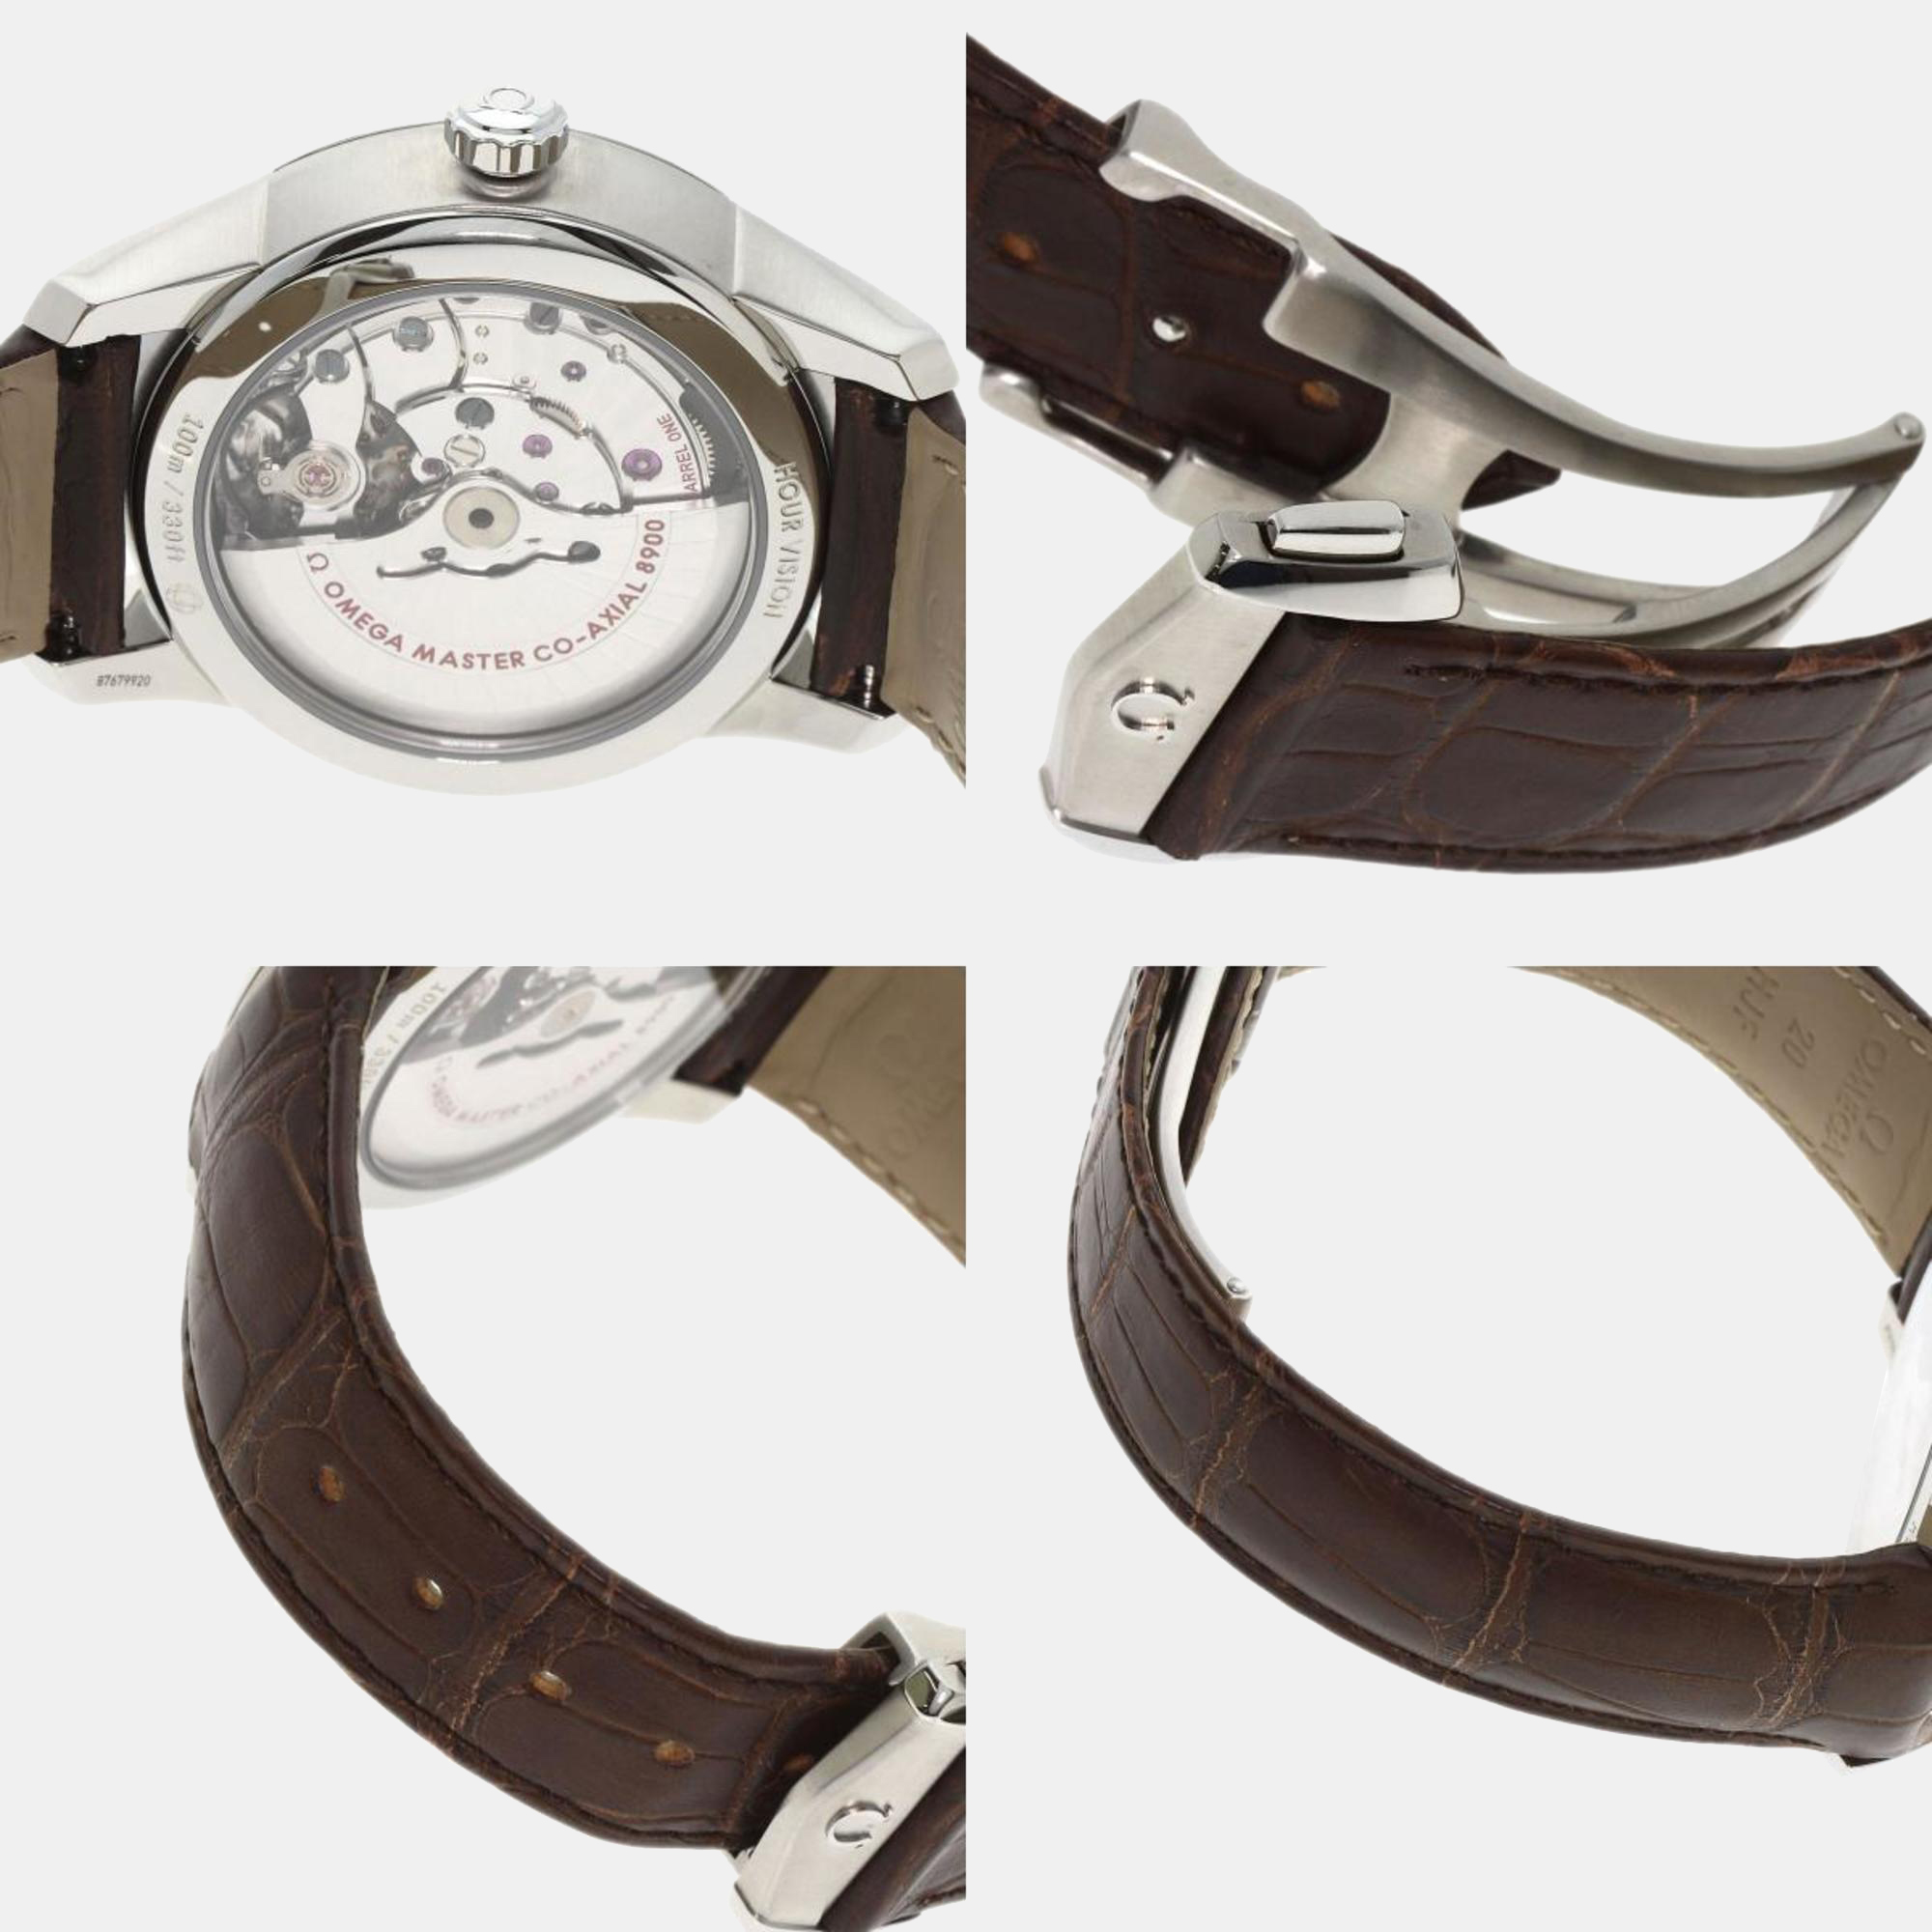 Omega Brown Stainless Steel De Ville 433.13.41.21.10.001 Automatic Men's Wristwatch 41 Mm